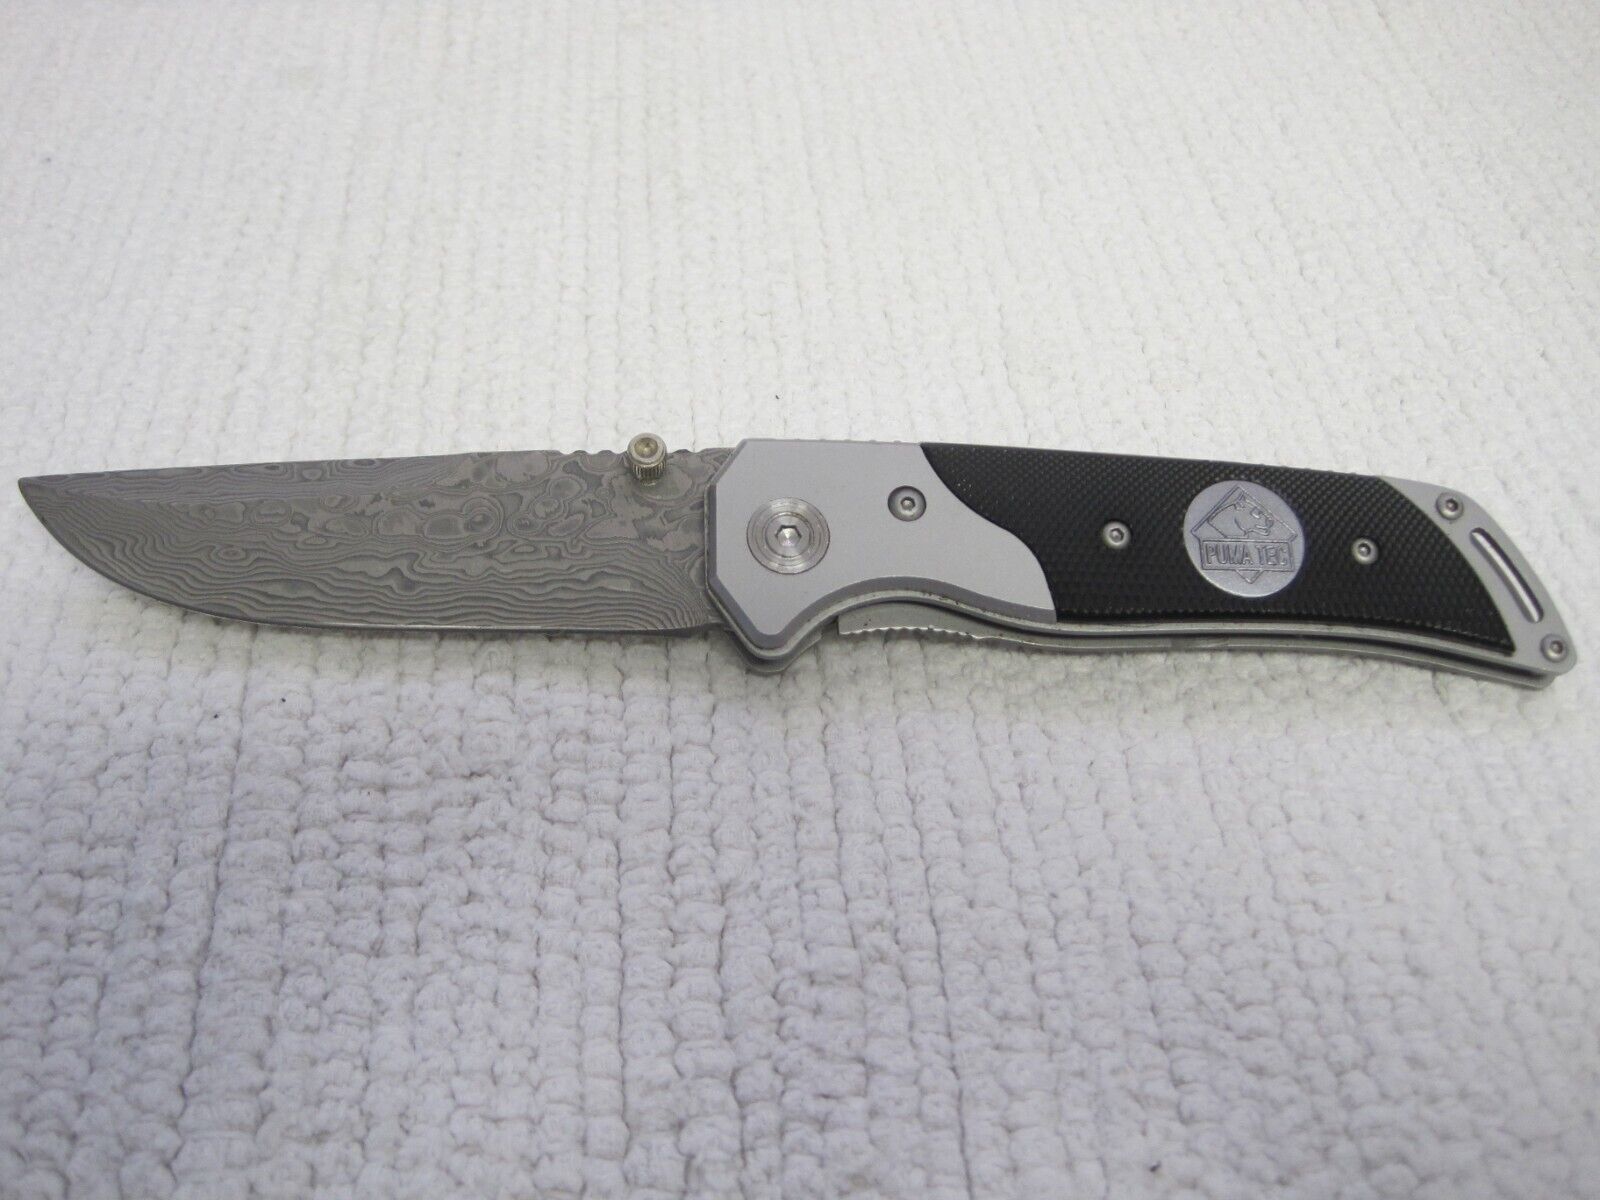 Puma Tec Damascus Steel Black Scales Folding EDC Pocket Knife FAST SHIPPING